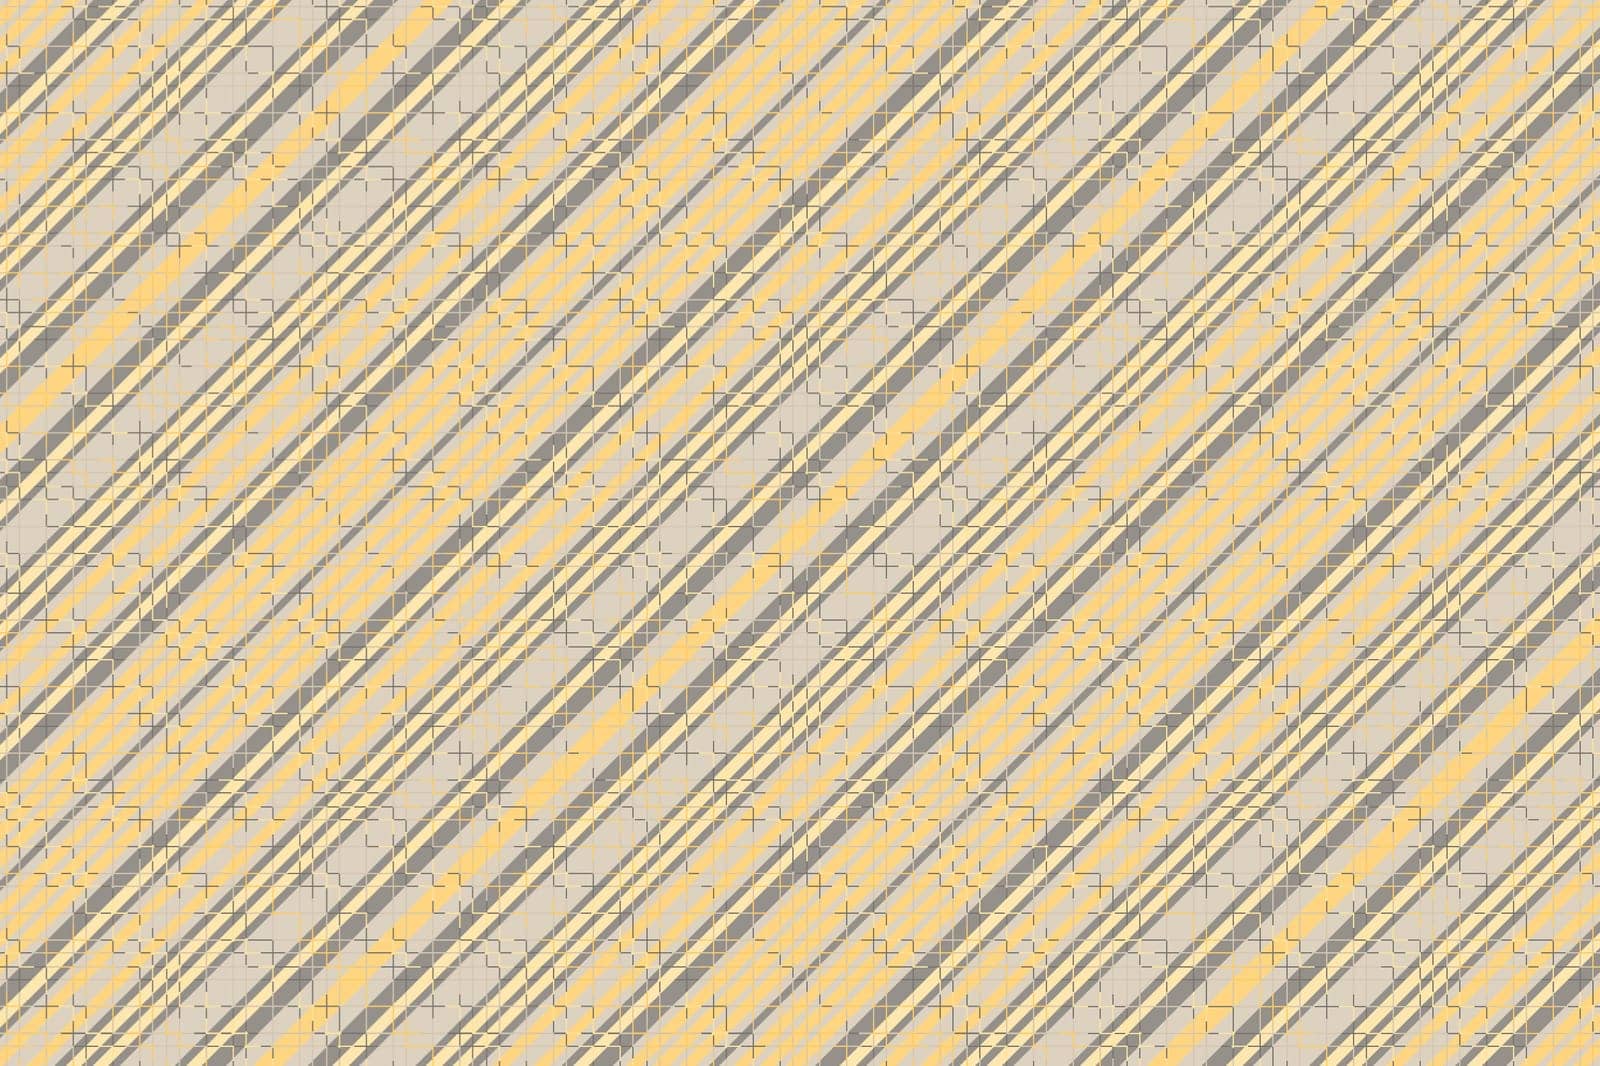 Tartan plaid pattern with texture. Vector illustration.